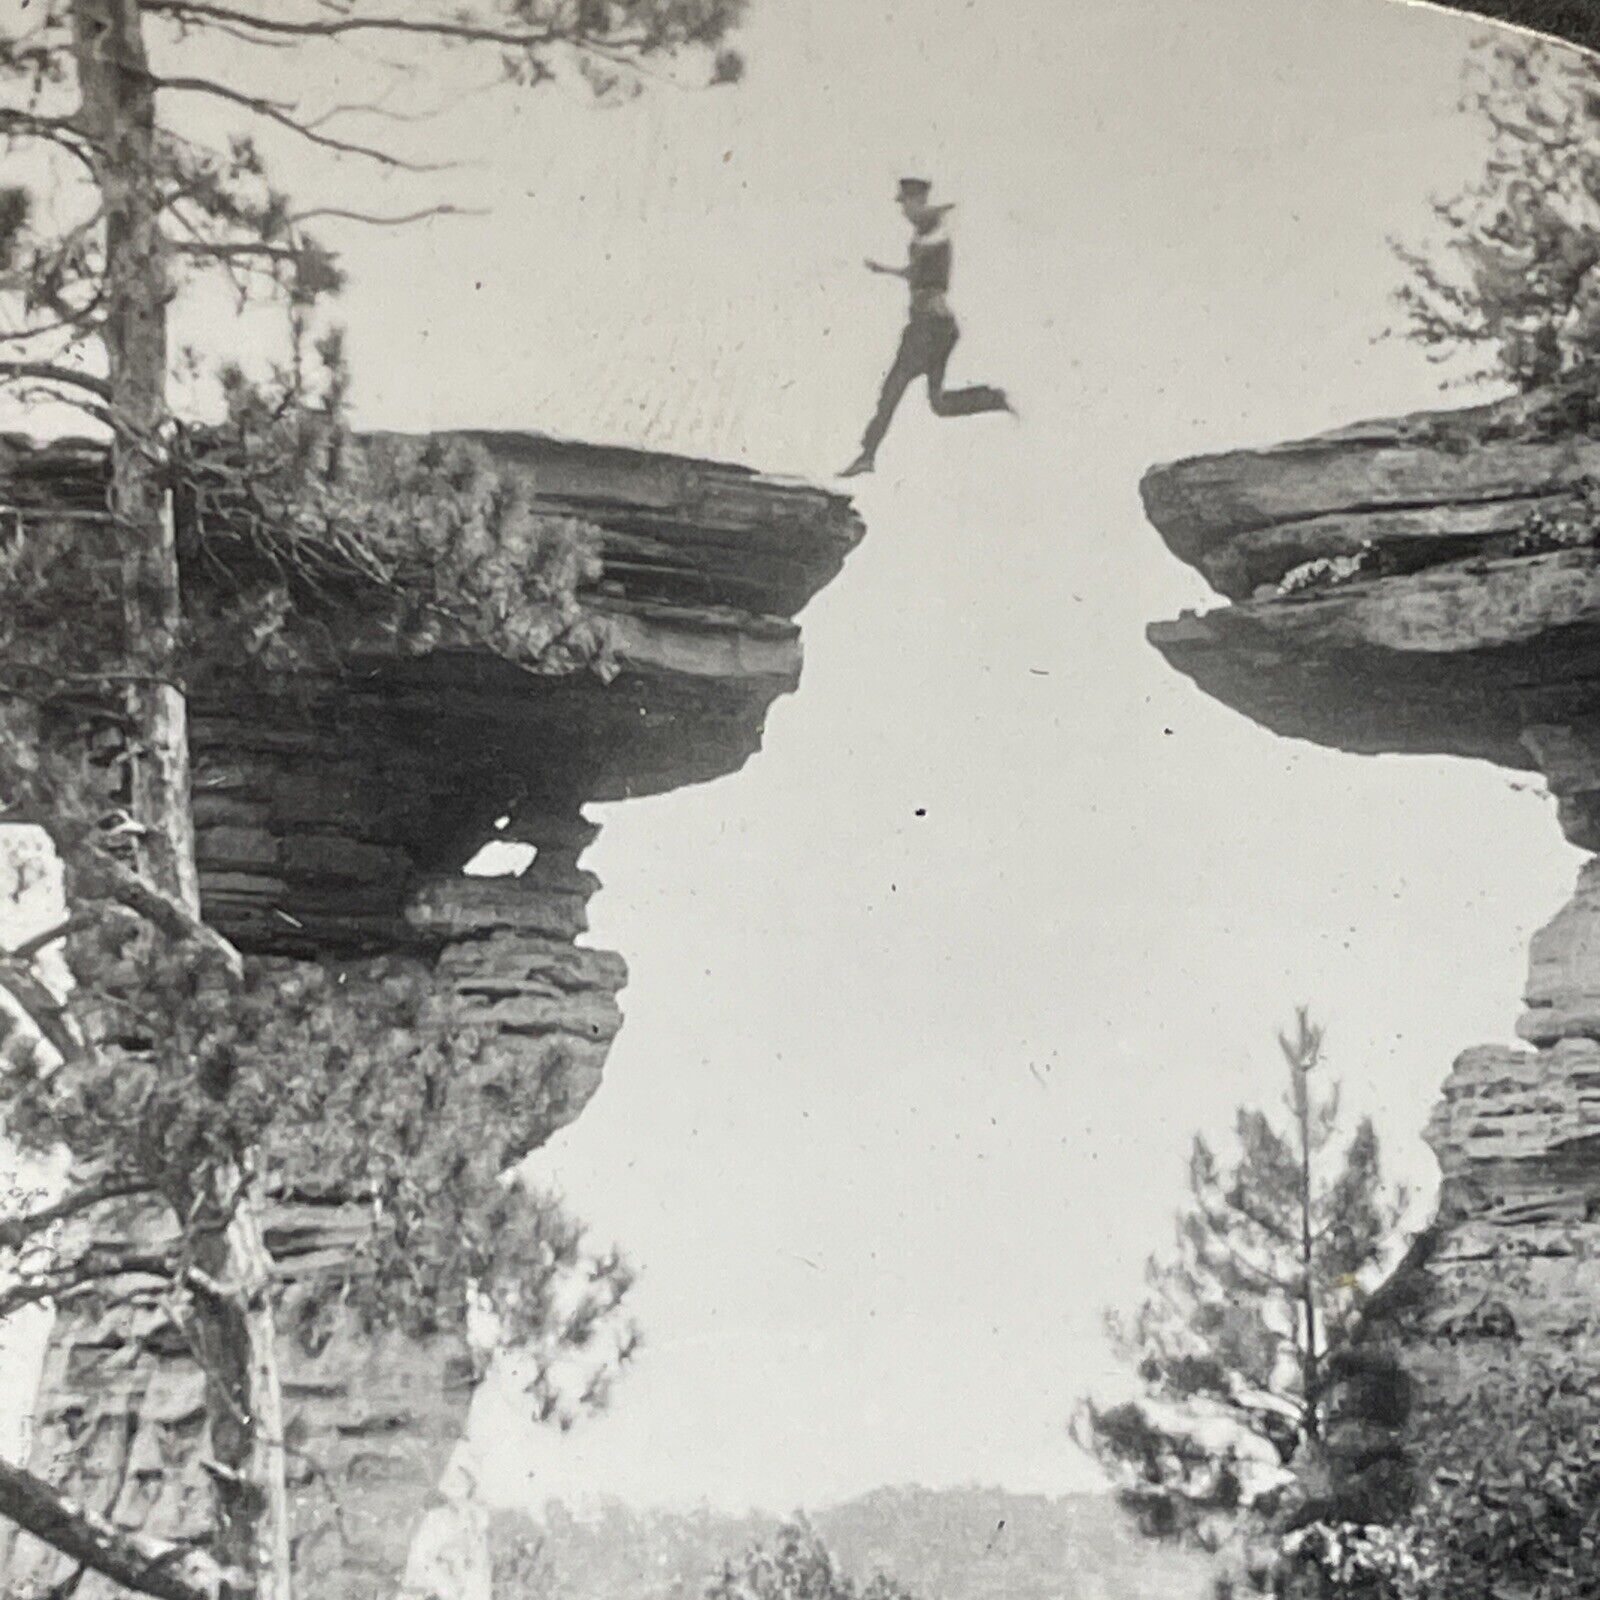 Antique 1910s Daredevil Jumps A Rock Gap Stereoview Photo Card V2595